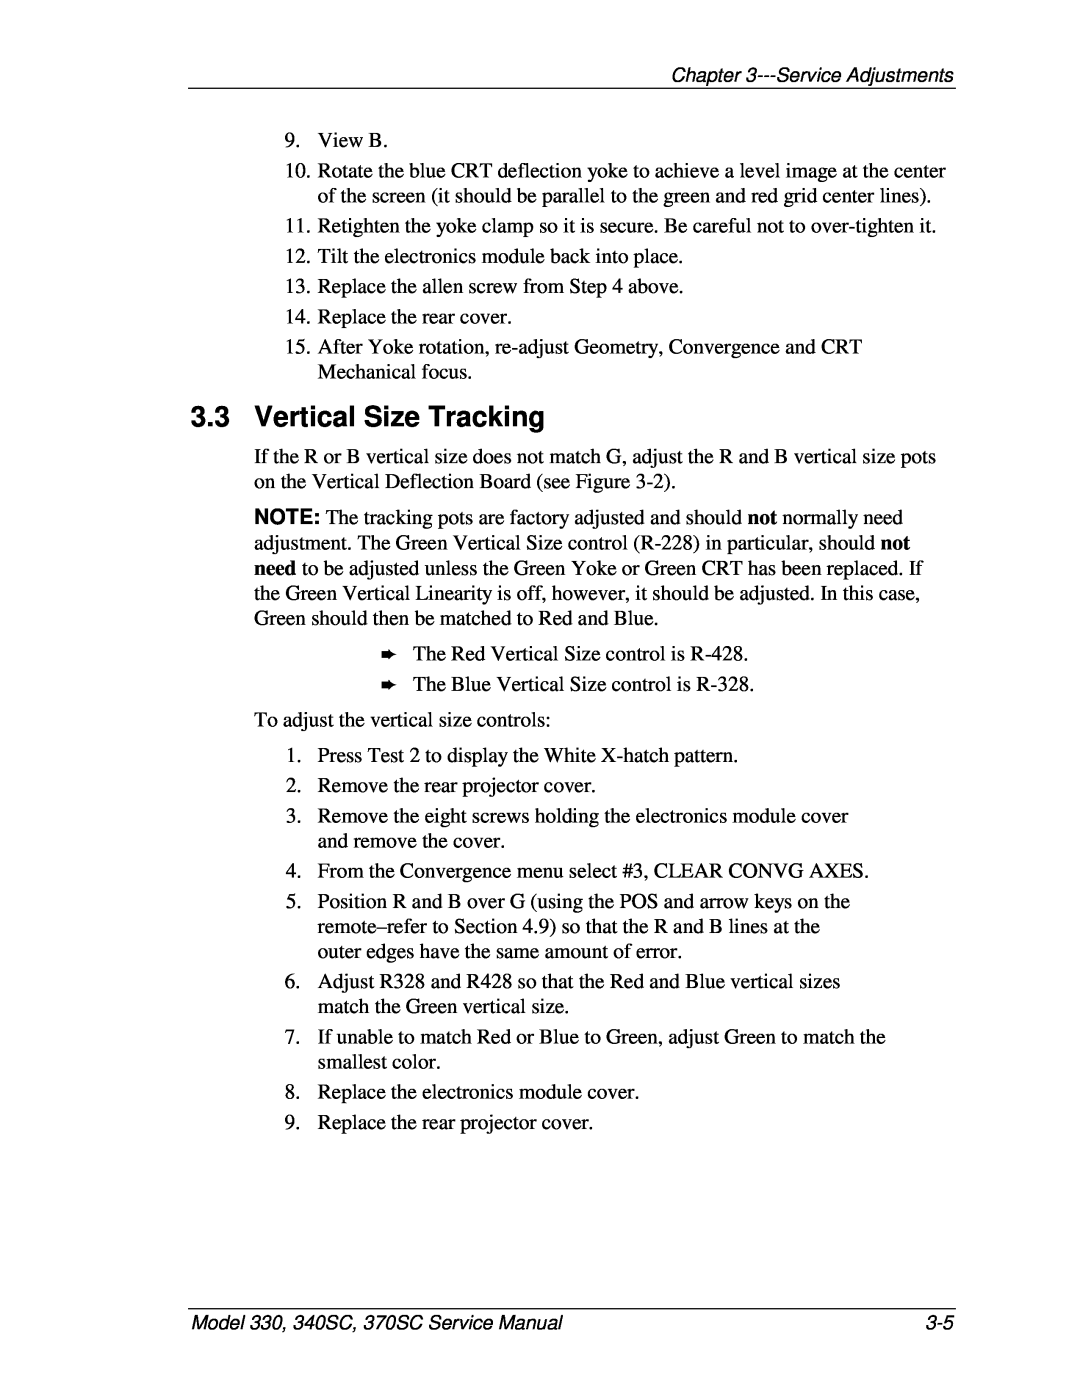 JVC 340 SC, 330, 370 SC service manual Vertical Size Tracking 